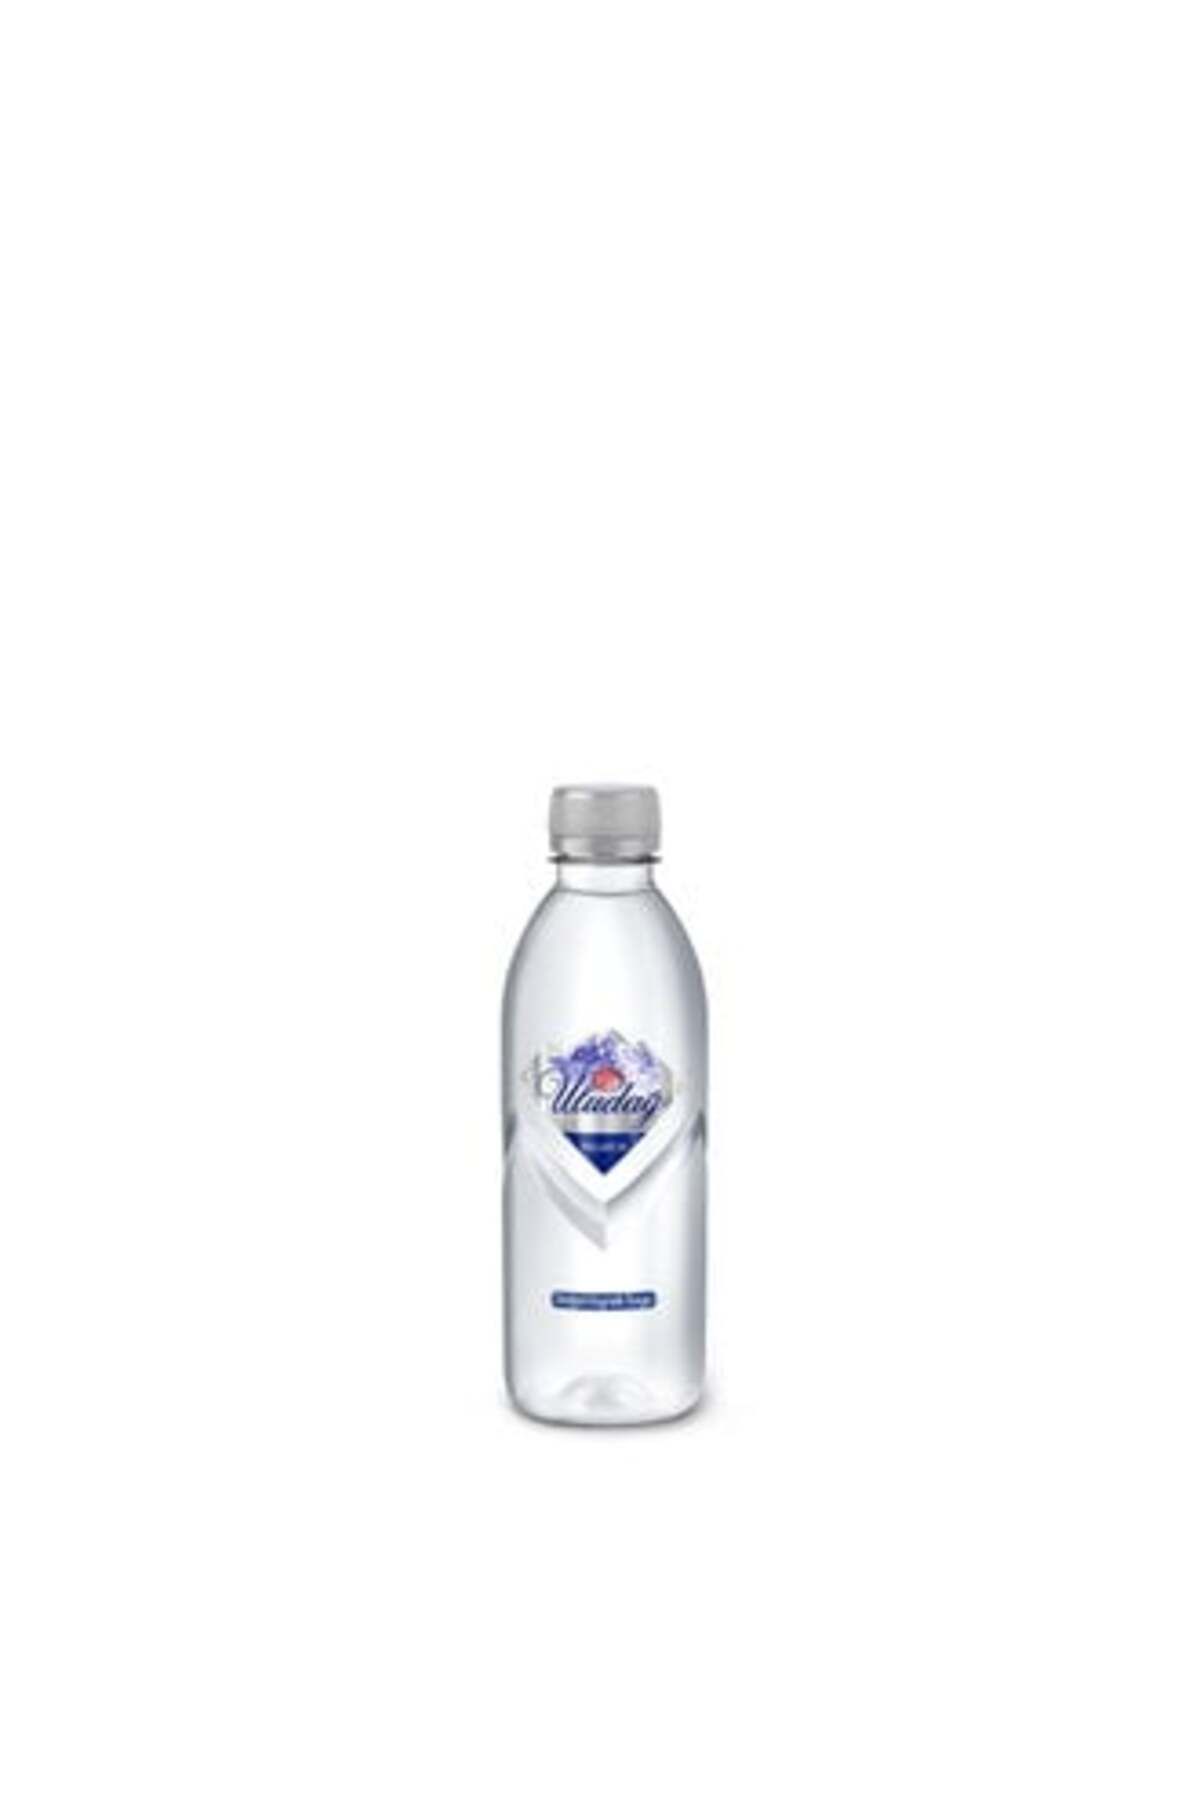 Uludağ Premium Doğal Kaynak Suyu 400 Ml Pet ( 1 ADET )